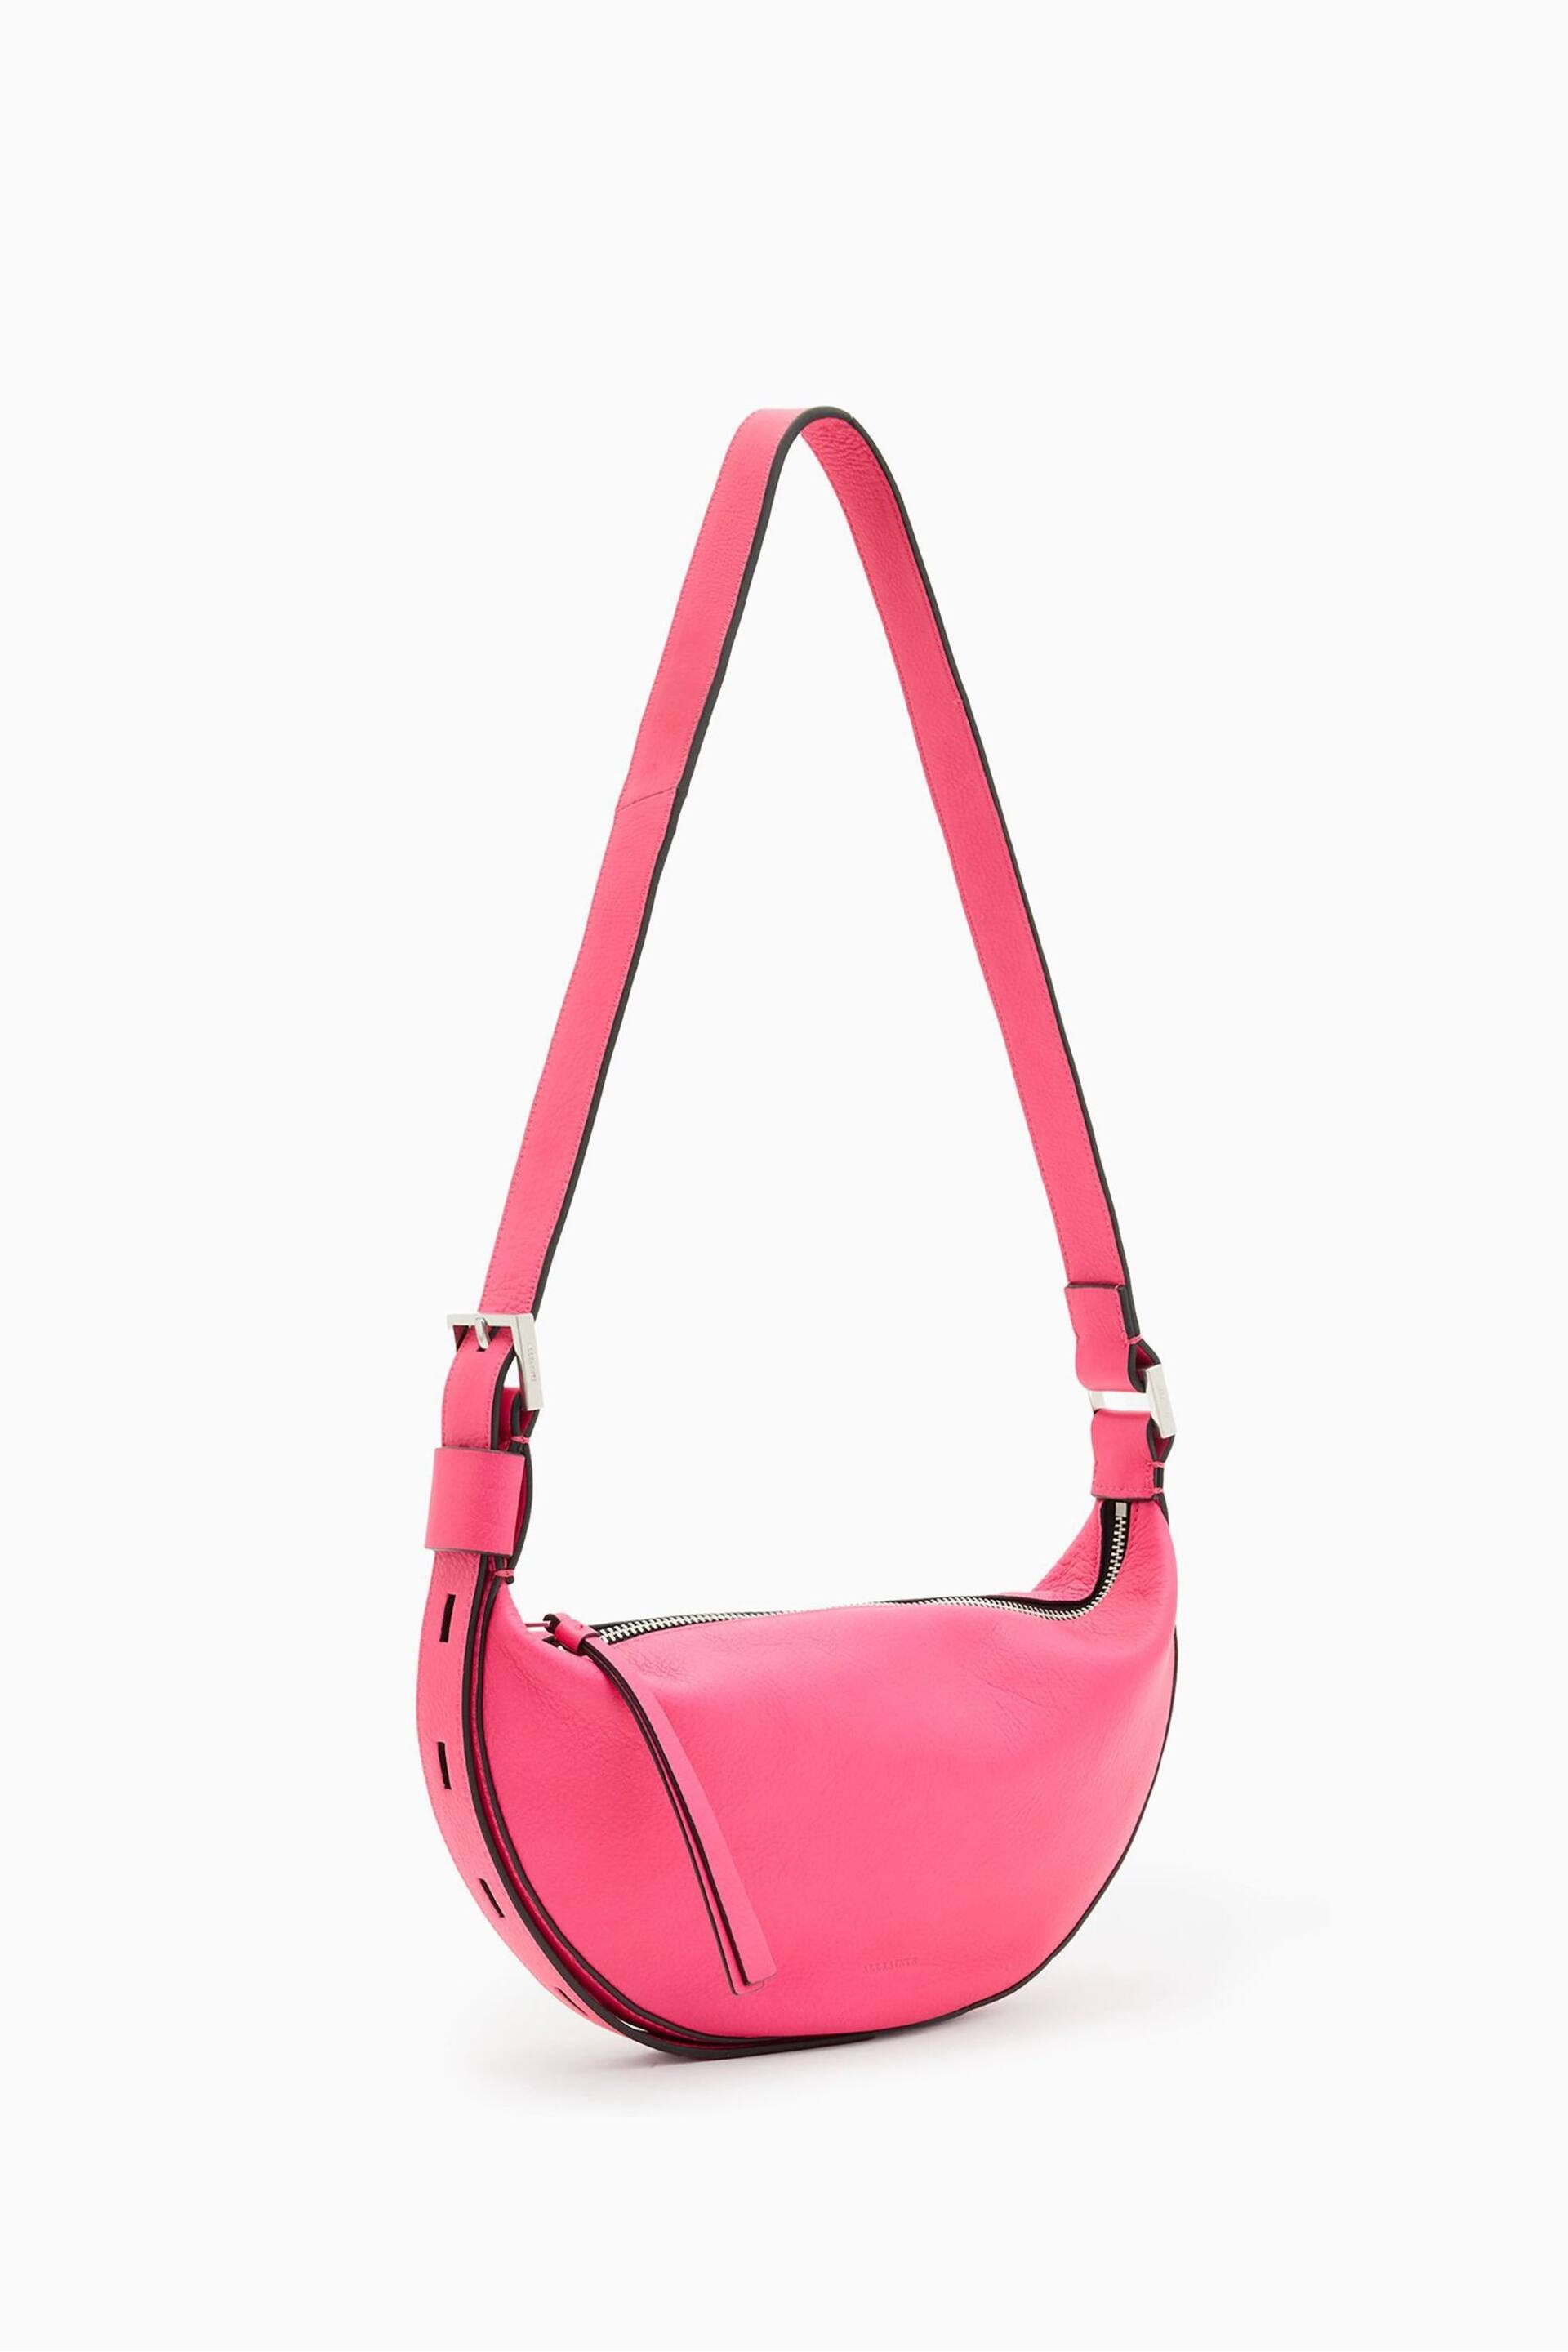 AllSaints Pink Half Moon Cross-Body Bag - Image 3 of 6